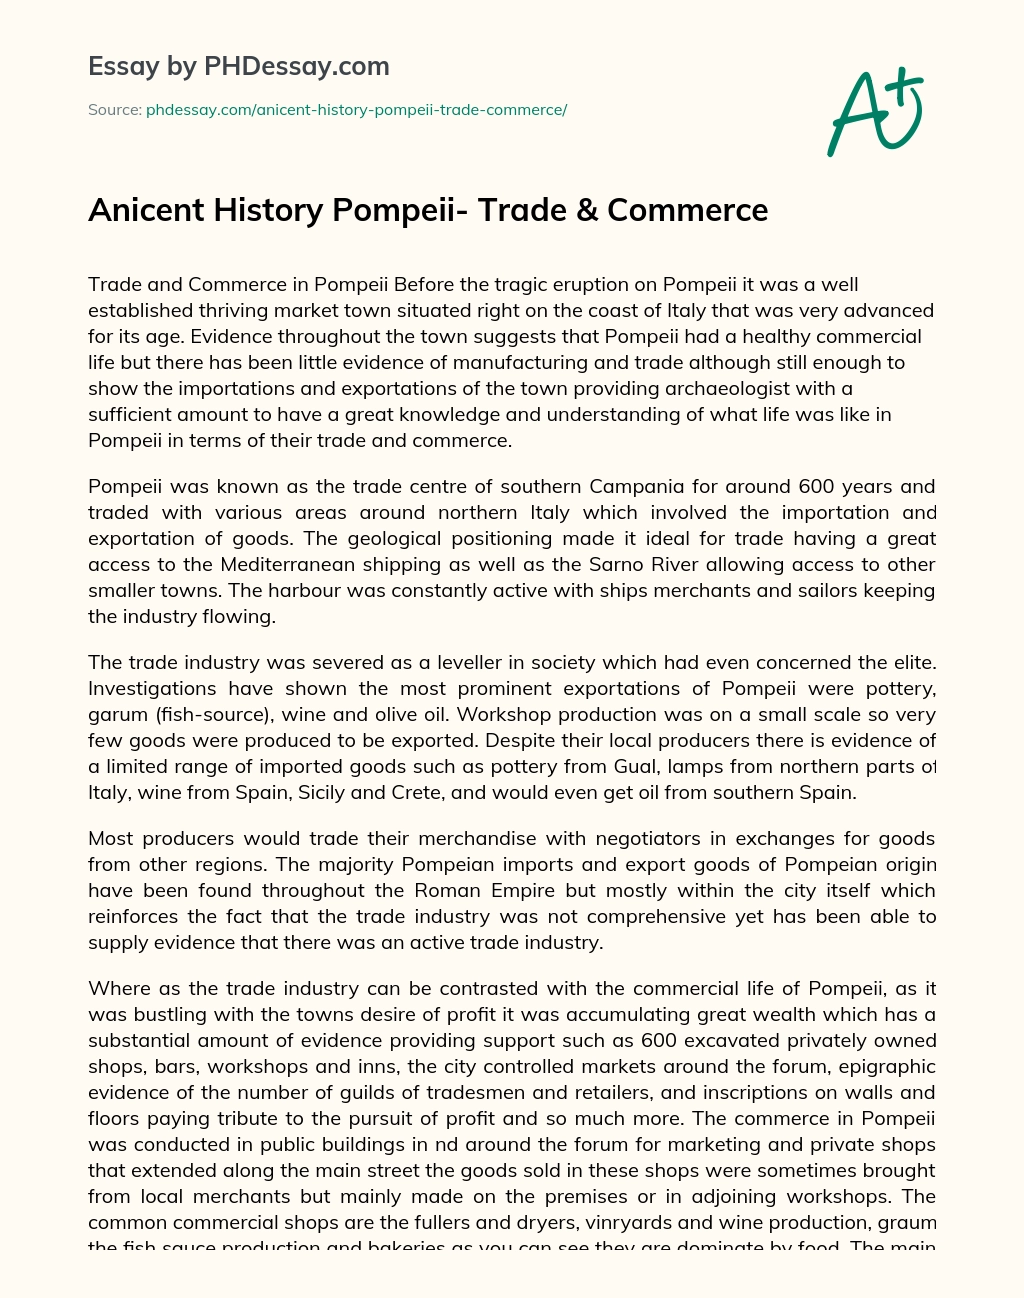 Anicent History Pompeii- Trade & Commerce essay